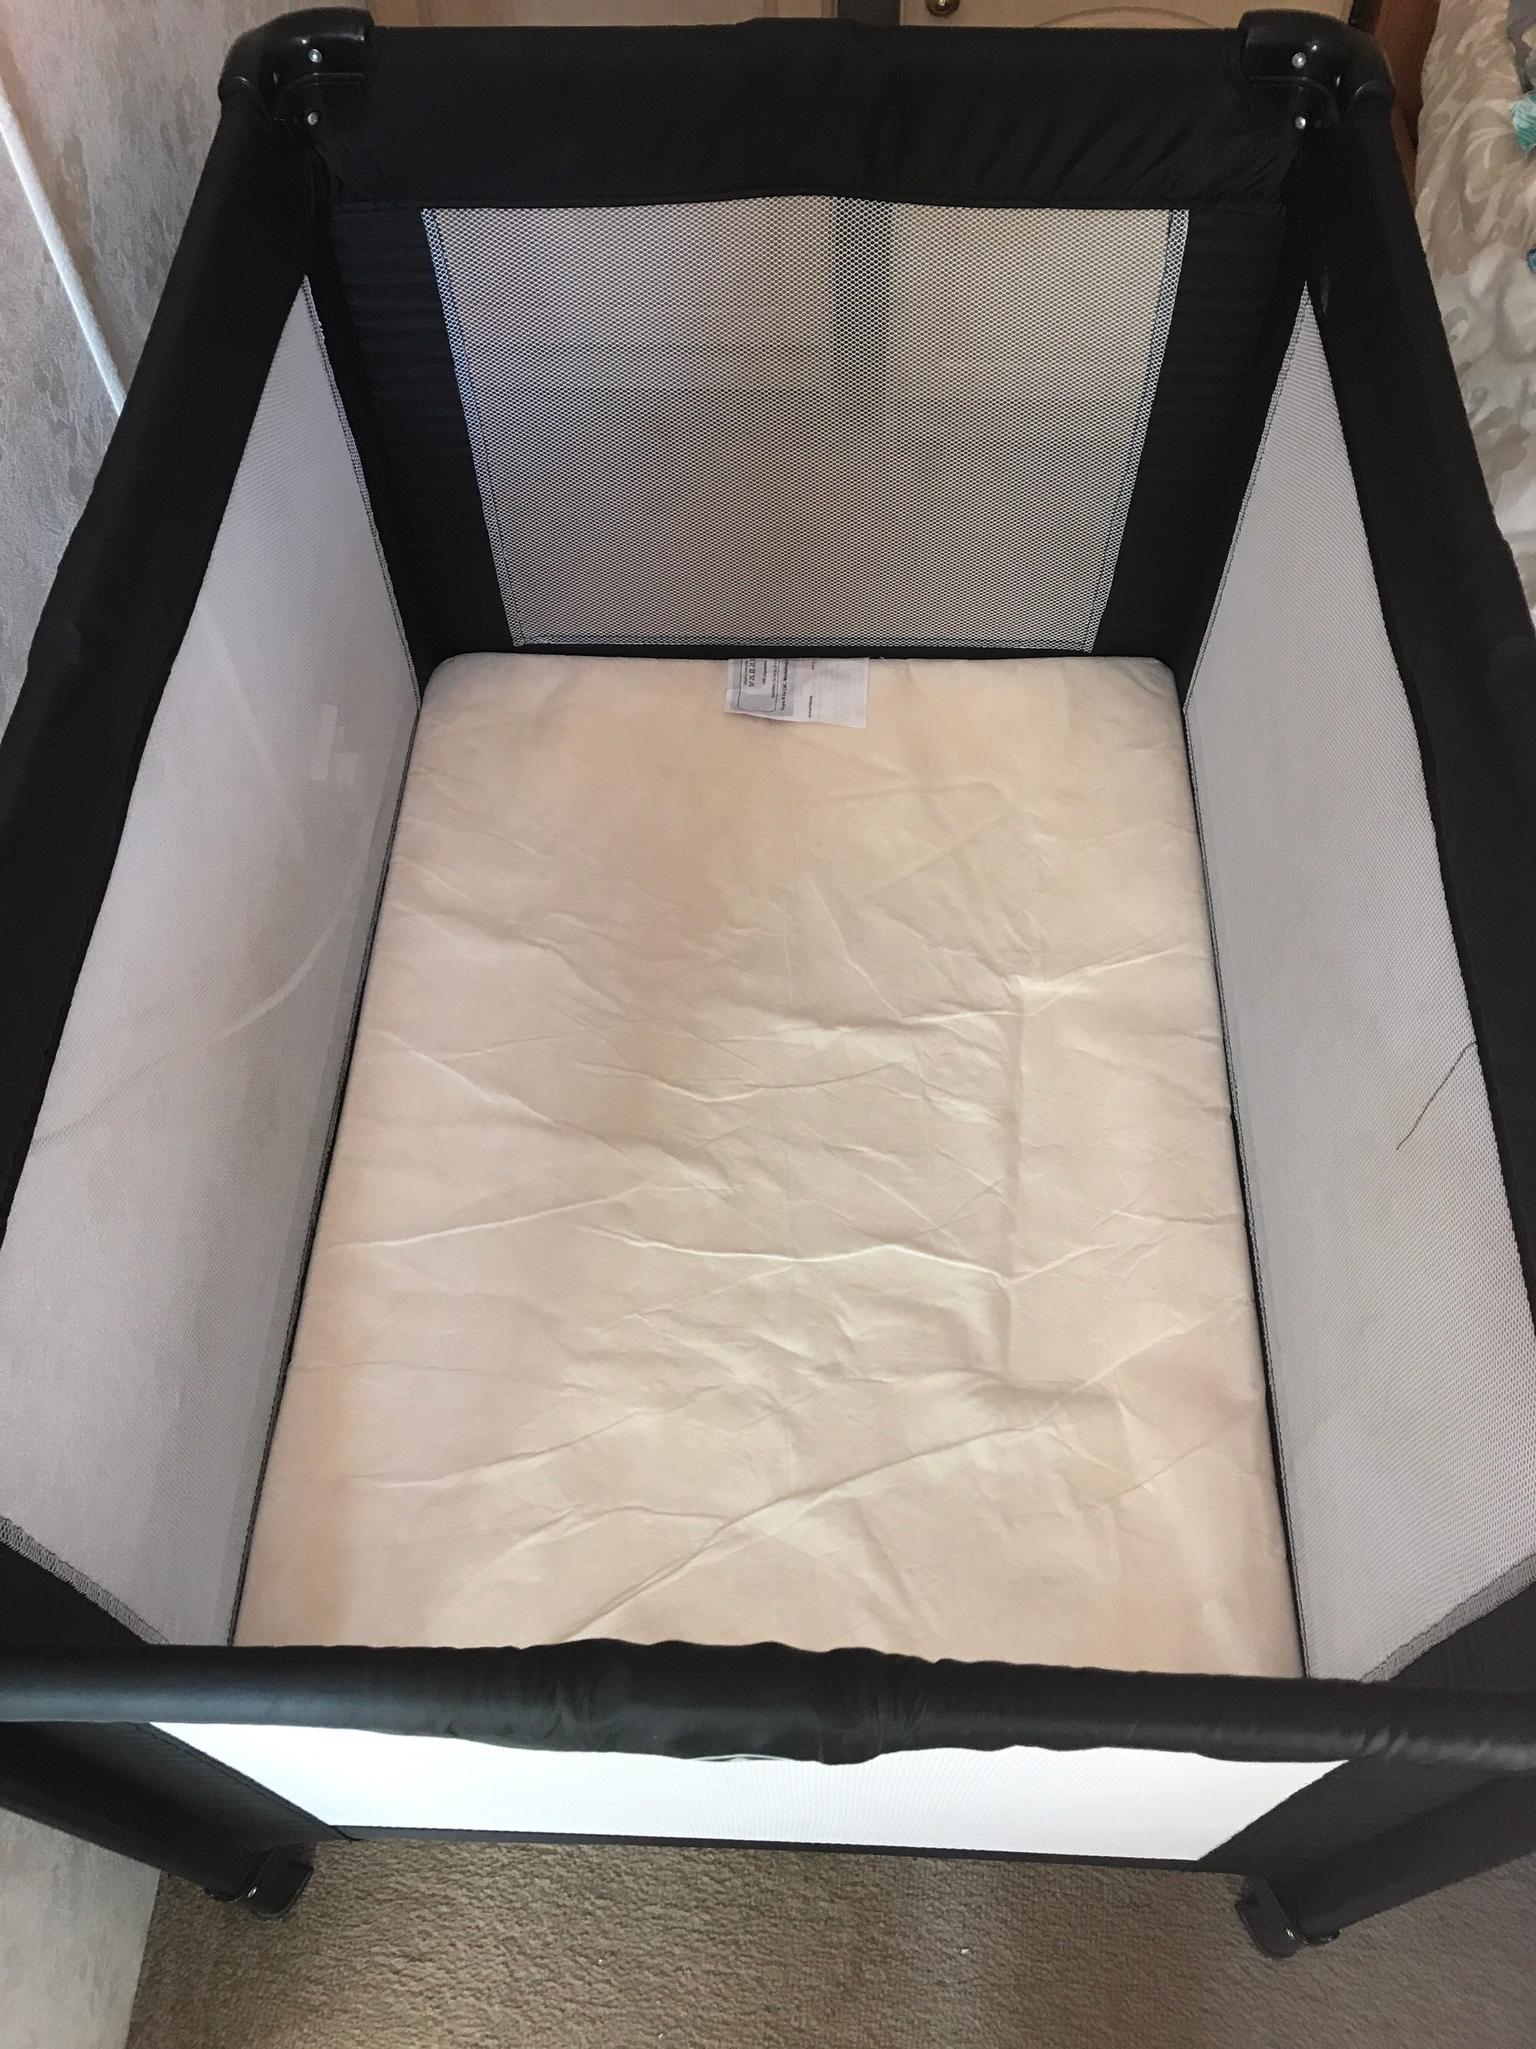 travel cot mattress argos